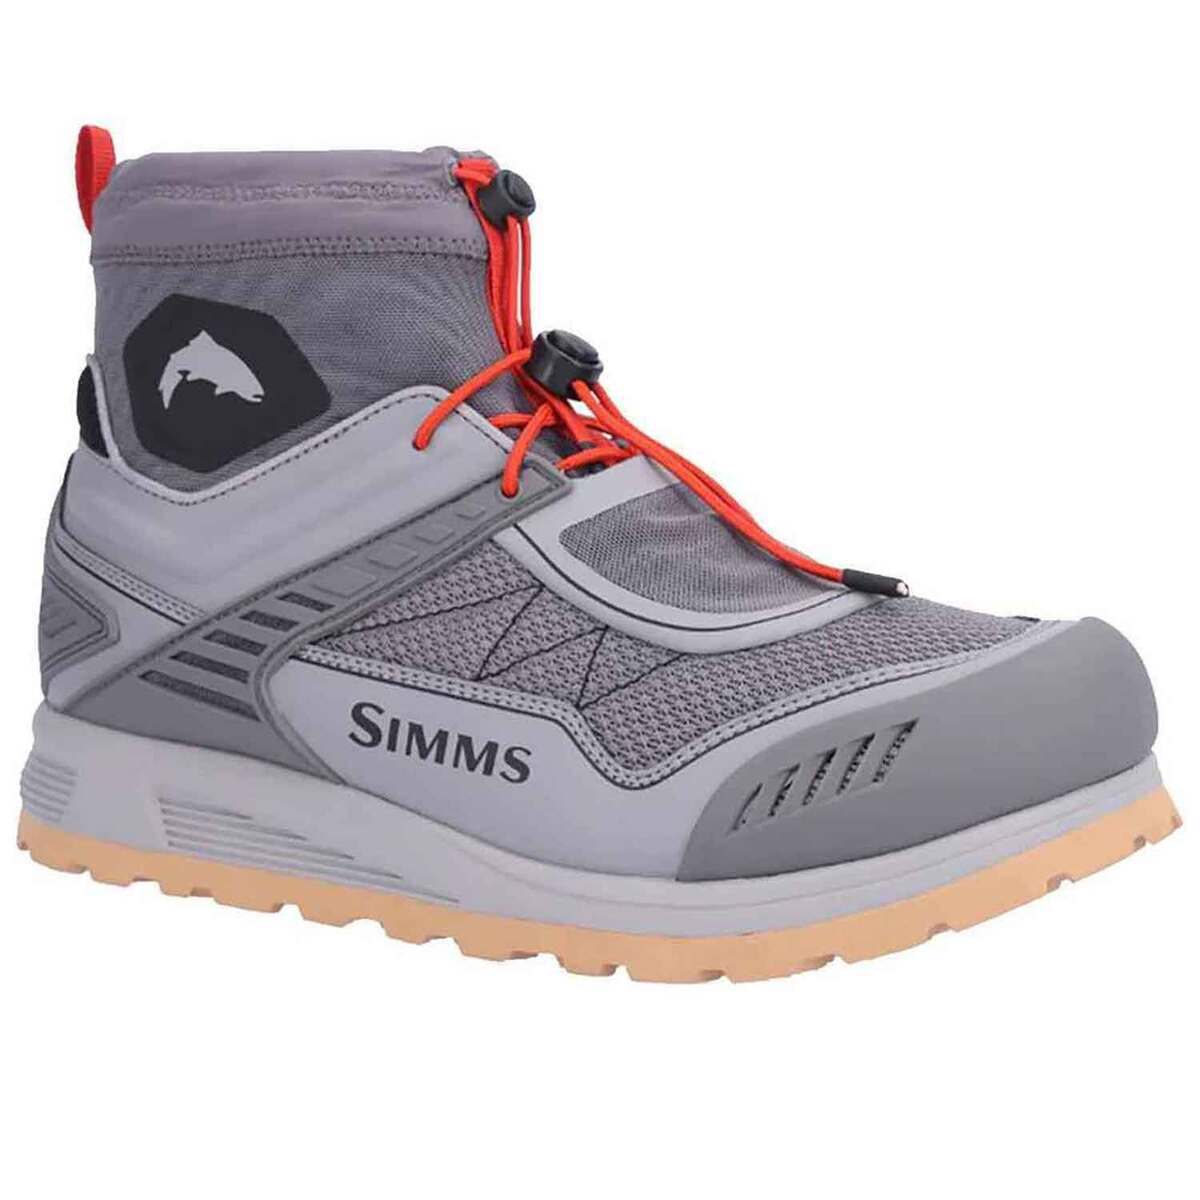 Simms Flyweight Access Wet Wading Shoe - Men's - Steel - 10